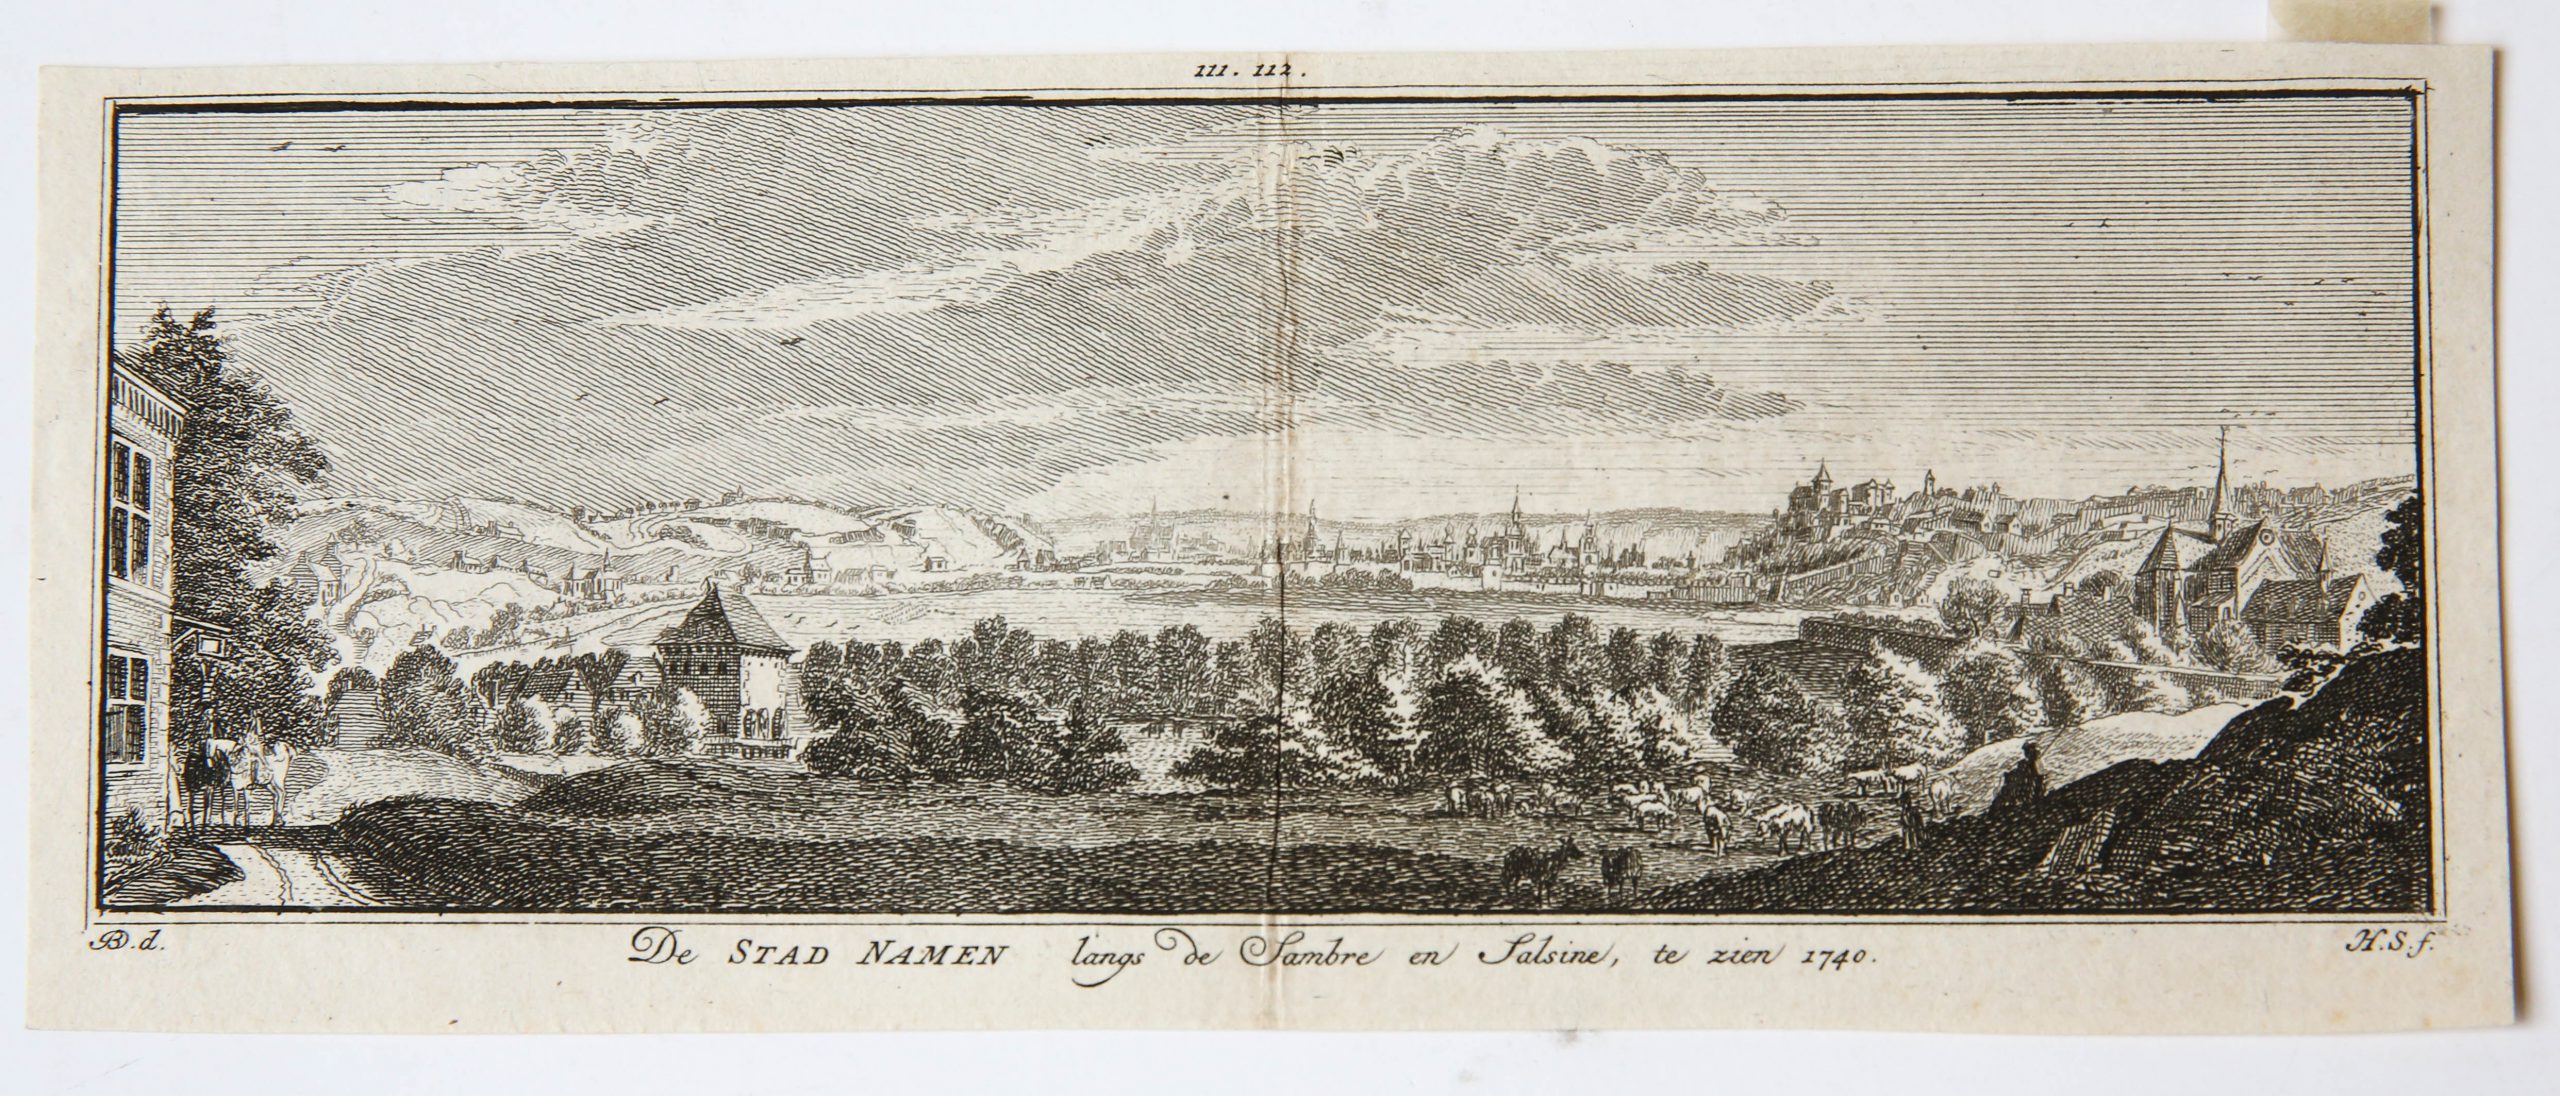 [City view Namen/stadgezicht Namen, Namur, België] De STAD NAMEN langs de Sambre en Salsine, te zien 1740 (Namur).